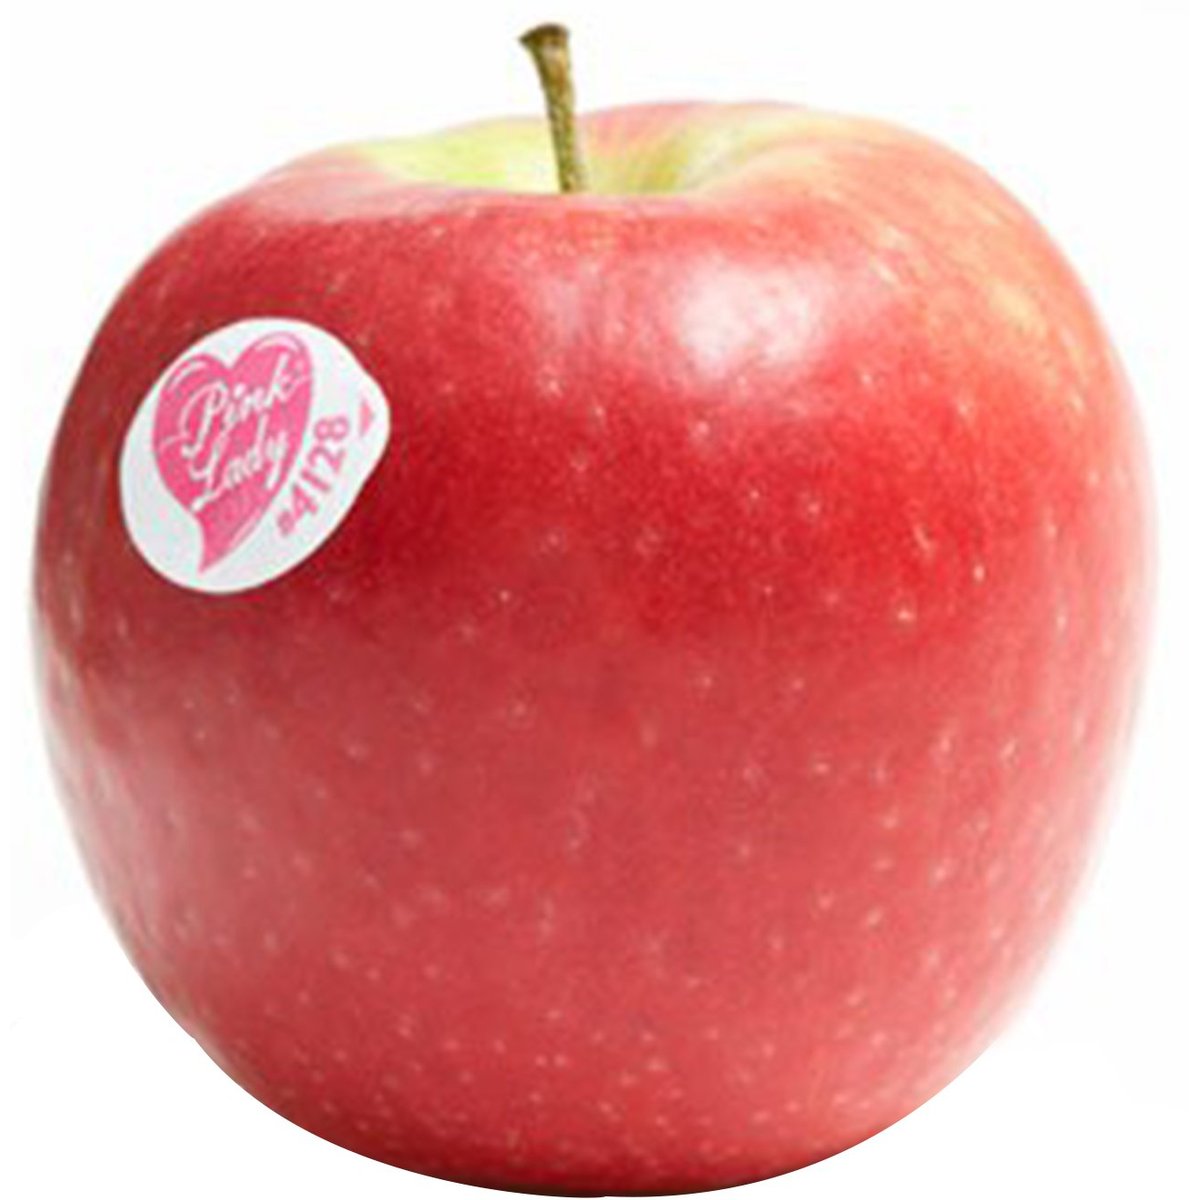 Jablko Pink lady 1 ks